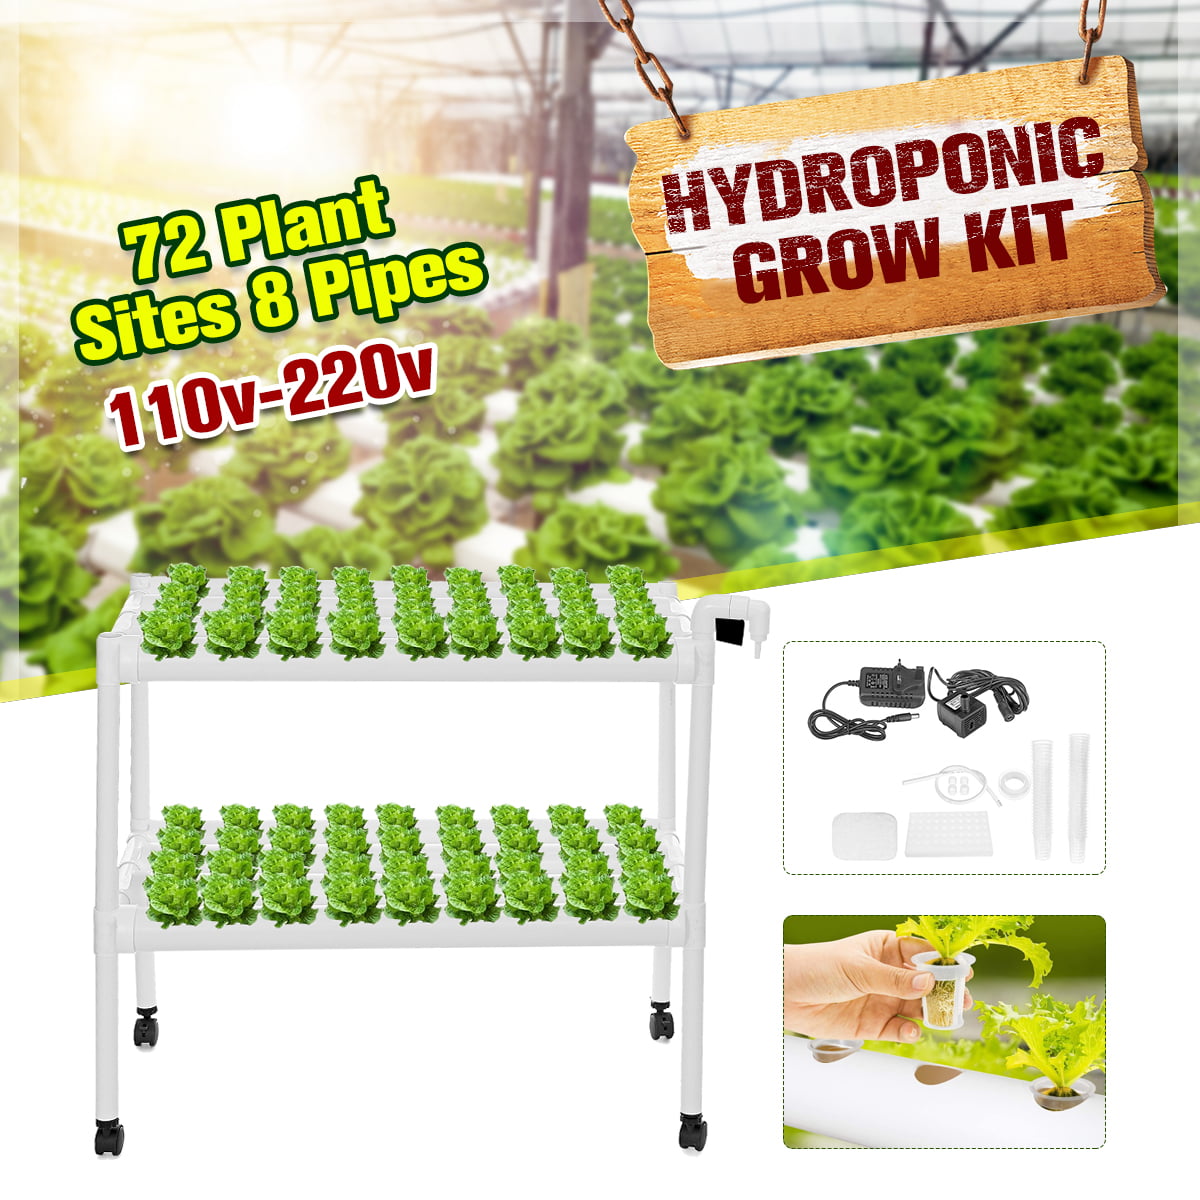 Hydroponic Grow Kit 72 Plant Sites food grade garden Flow Garden System HOT 